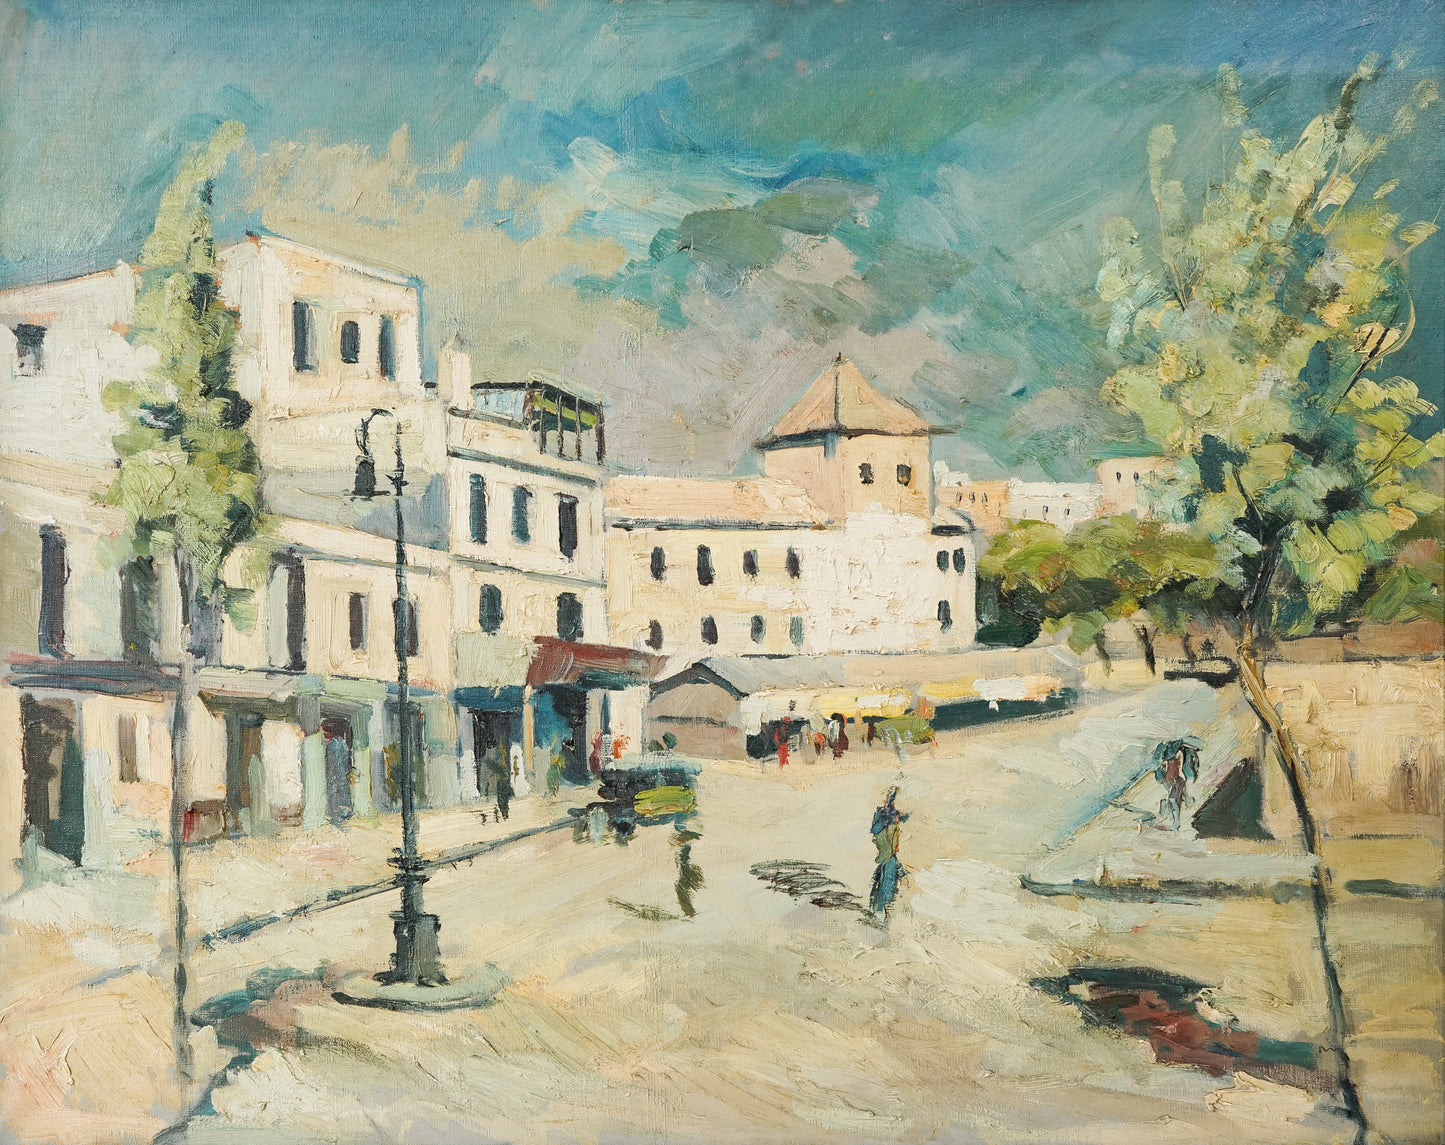 Impressionist Town Scene - Oil on Canvas